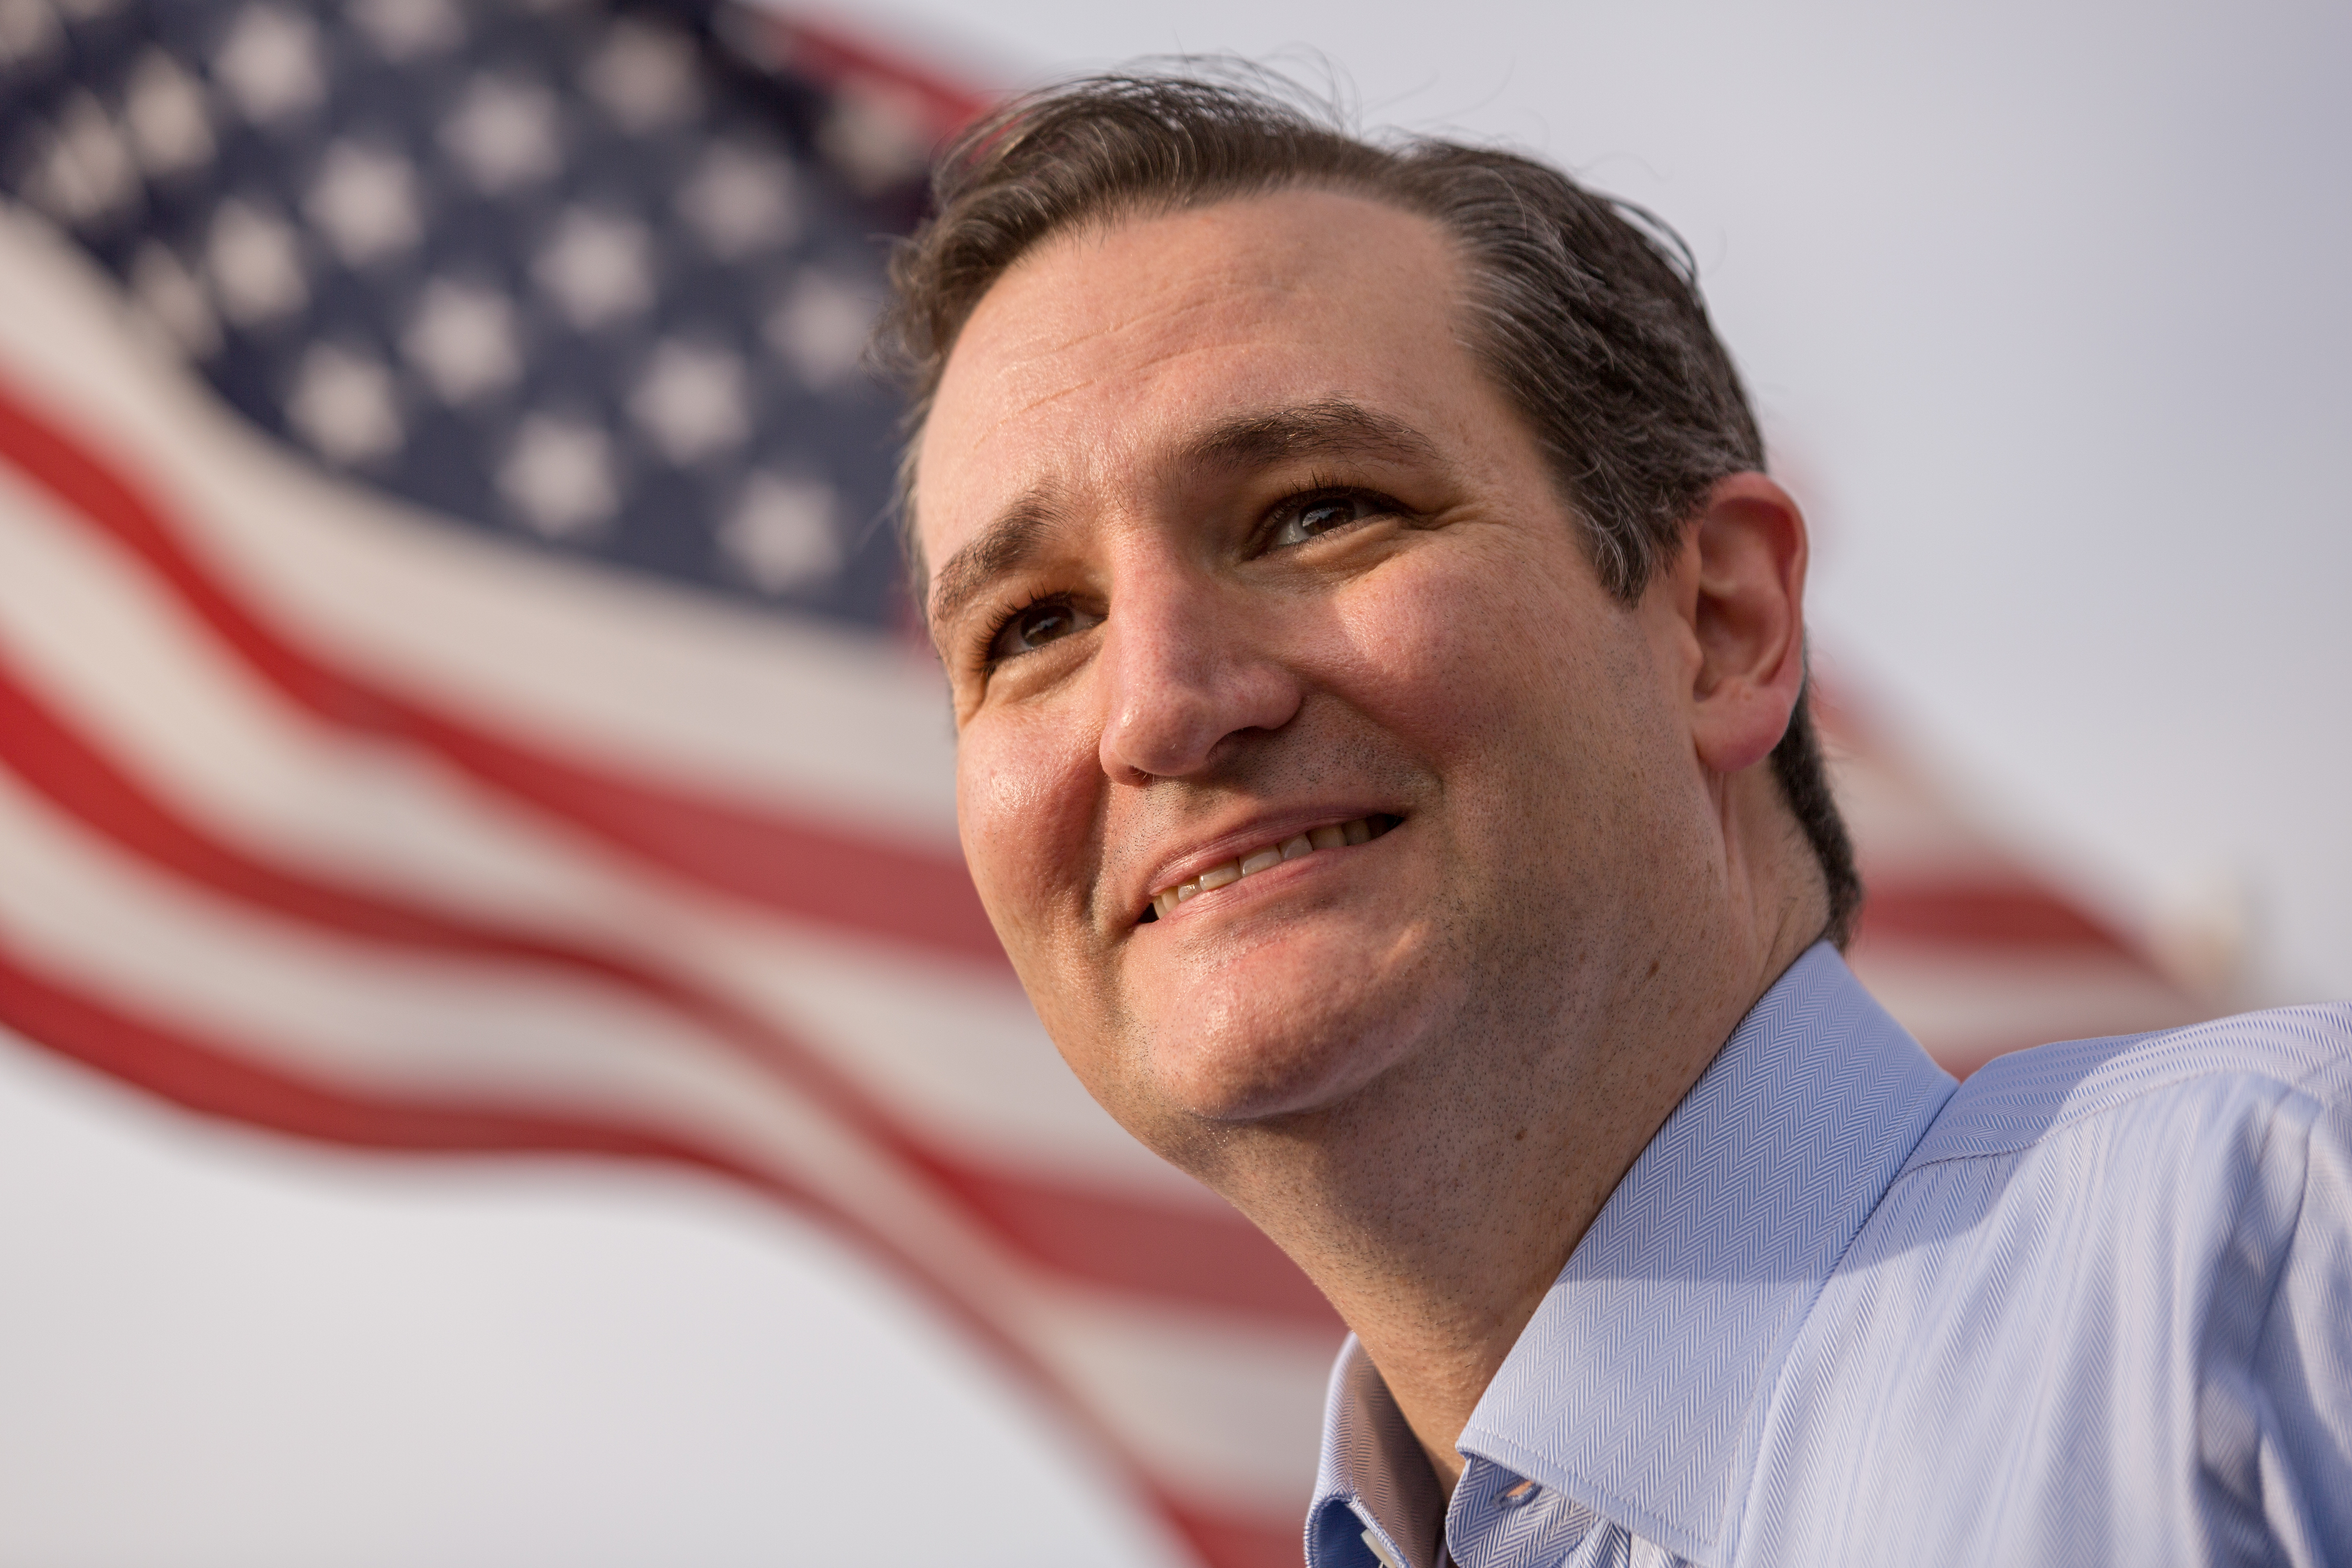 GOP Presidential Hopeful Ted Cruz Campaigns In South Carolina